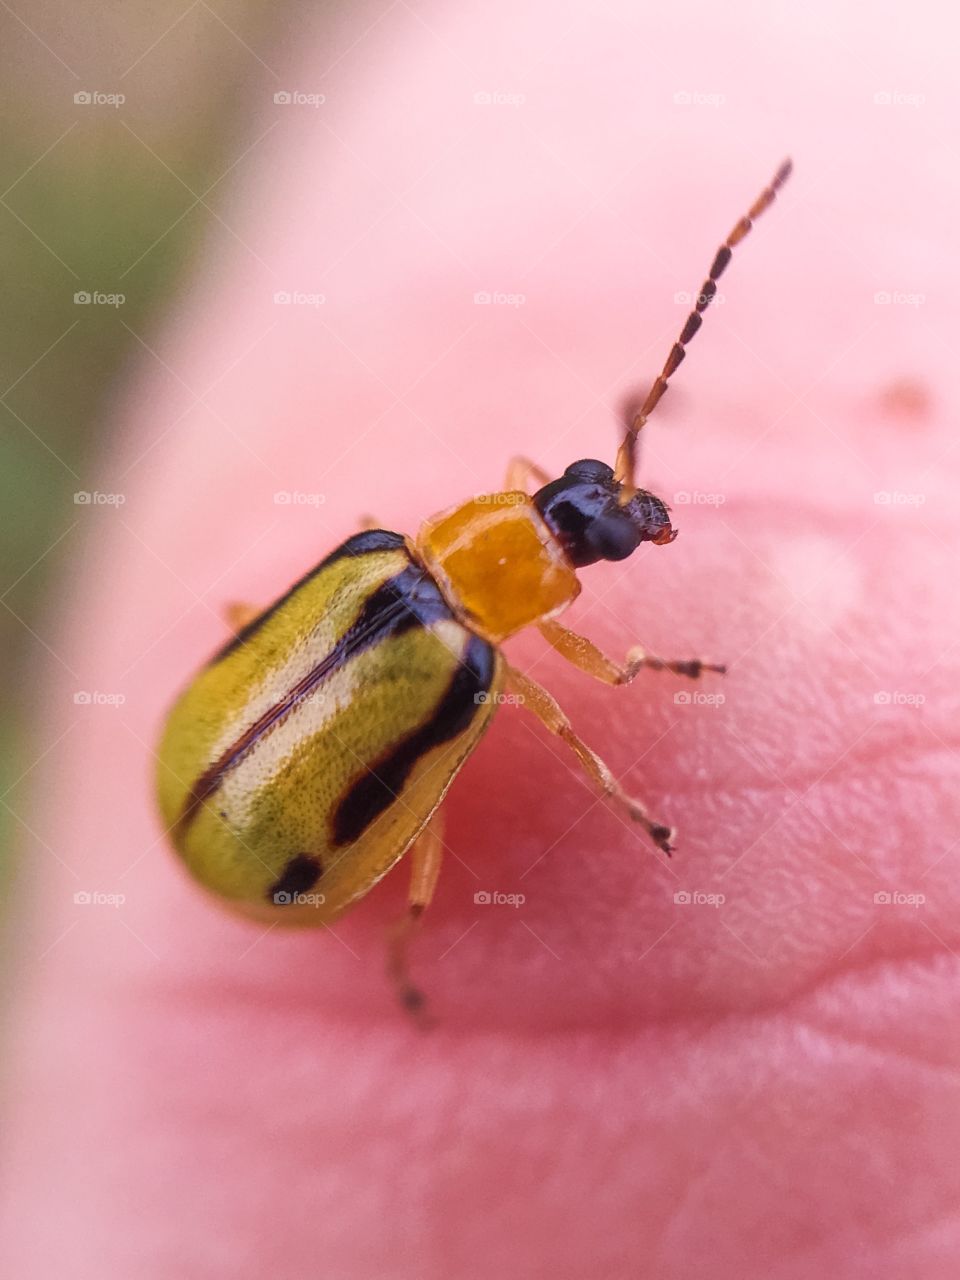 Little beetle on the finger